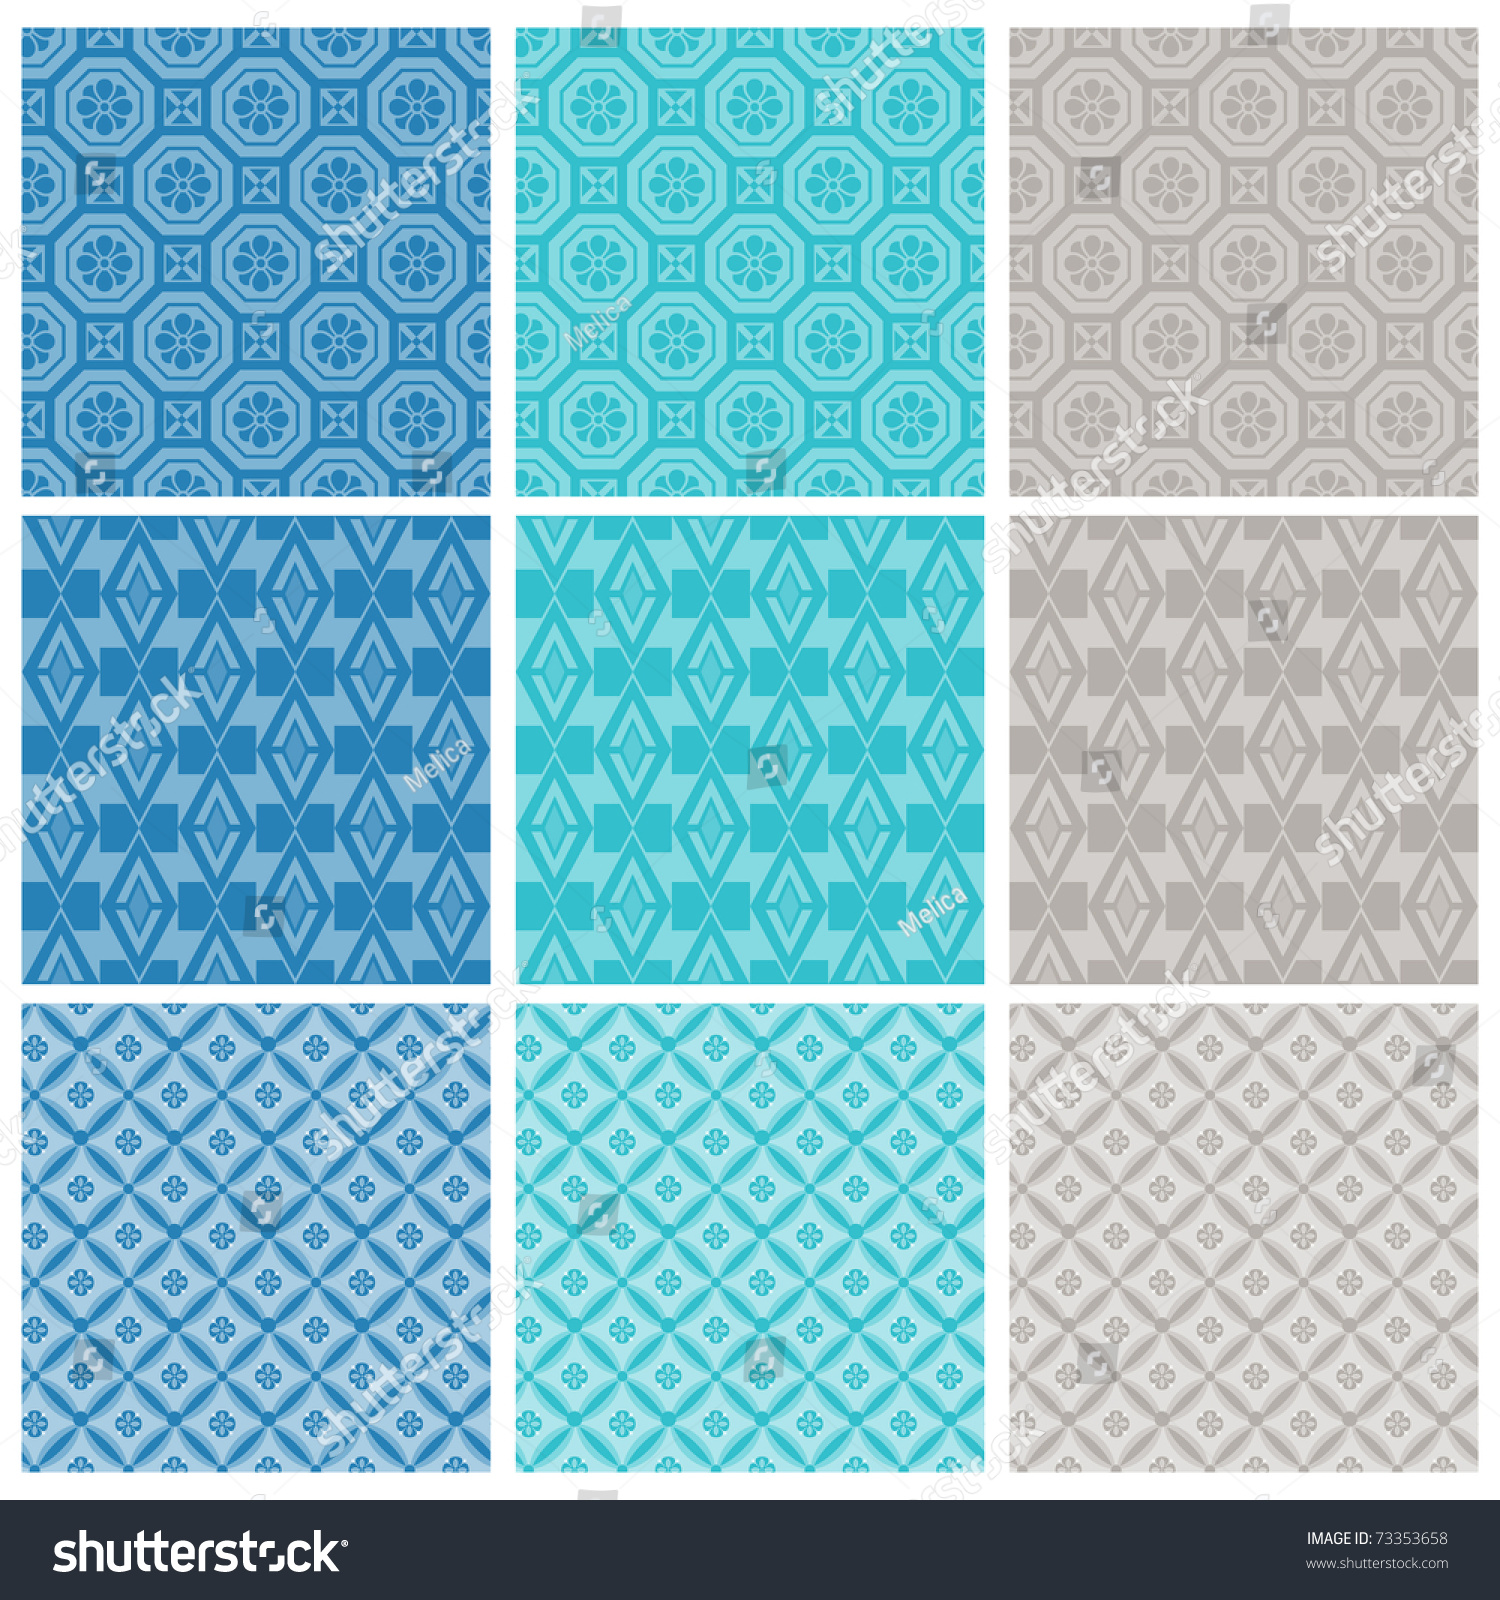 A Set Of Nine Seamlessly Tiling Patterns In Trendy Colors. All Design ...